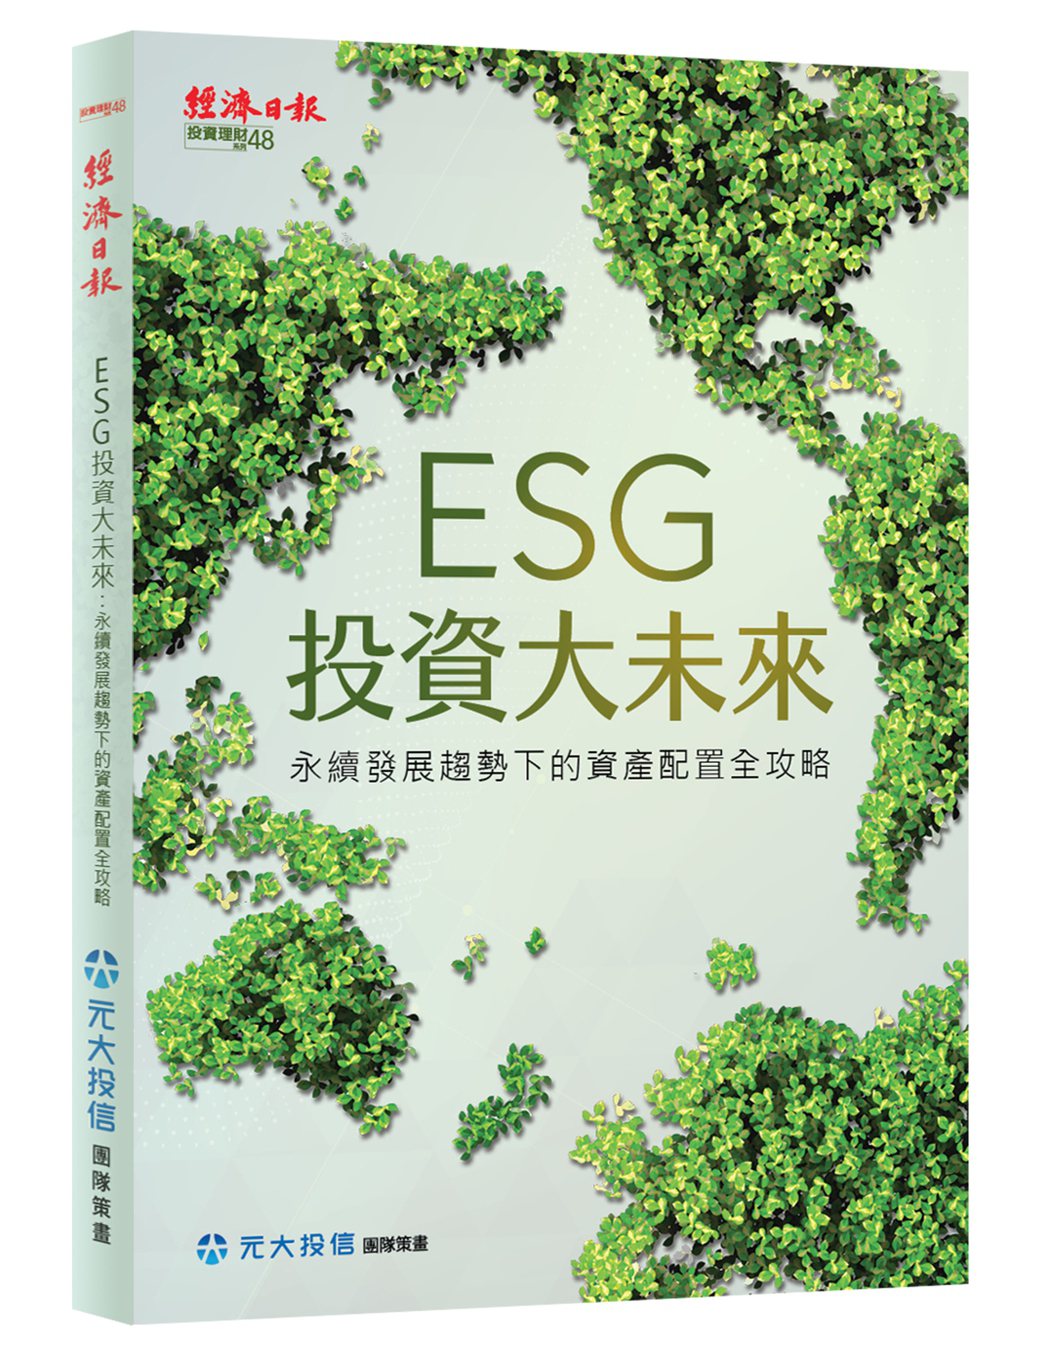 《ESG投資大未來》書封。經濟日報／出版